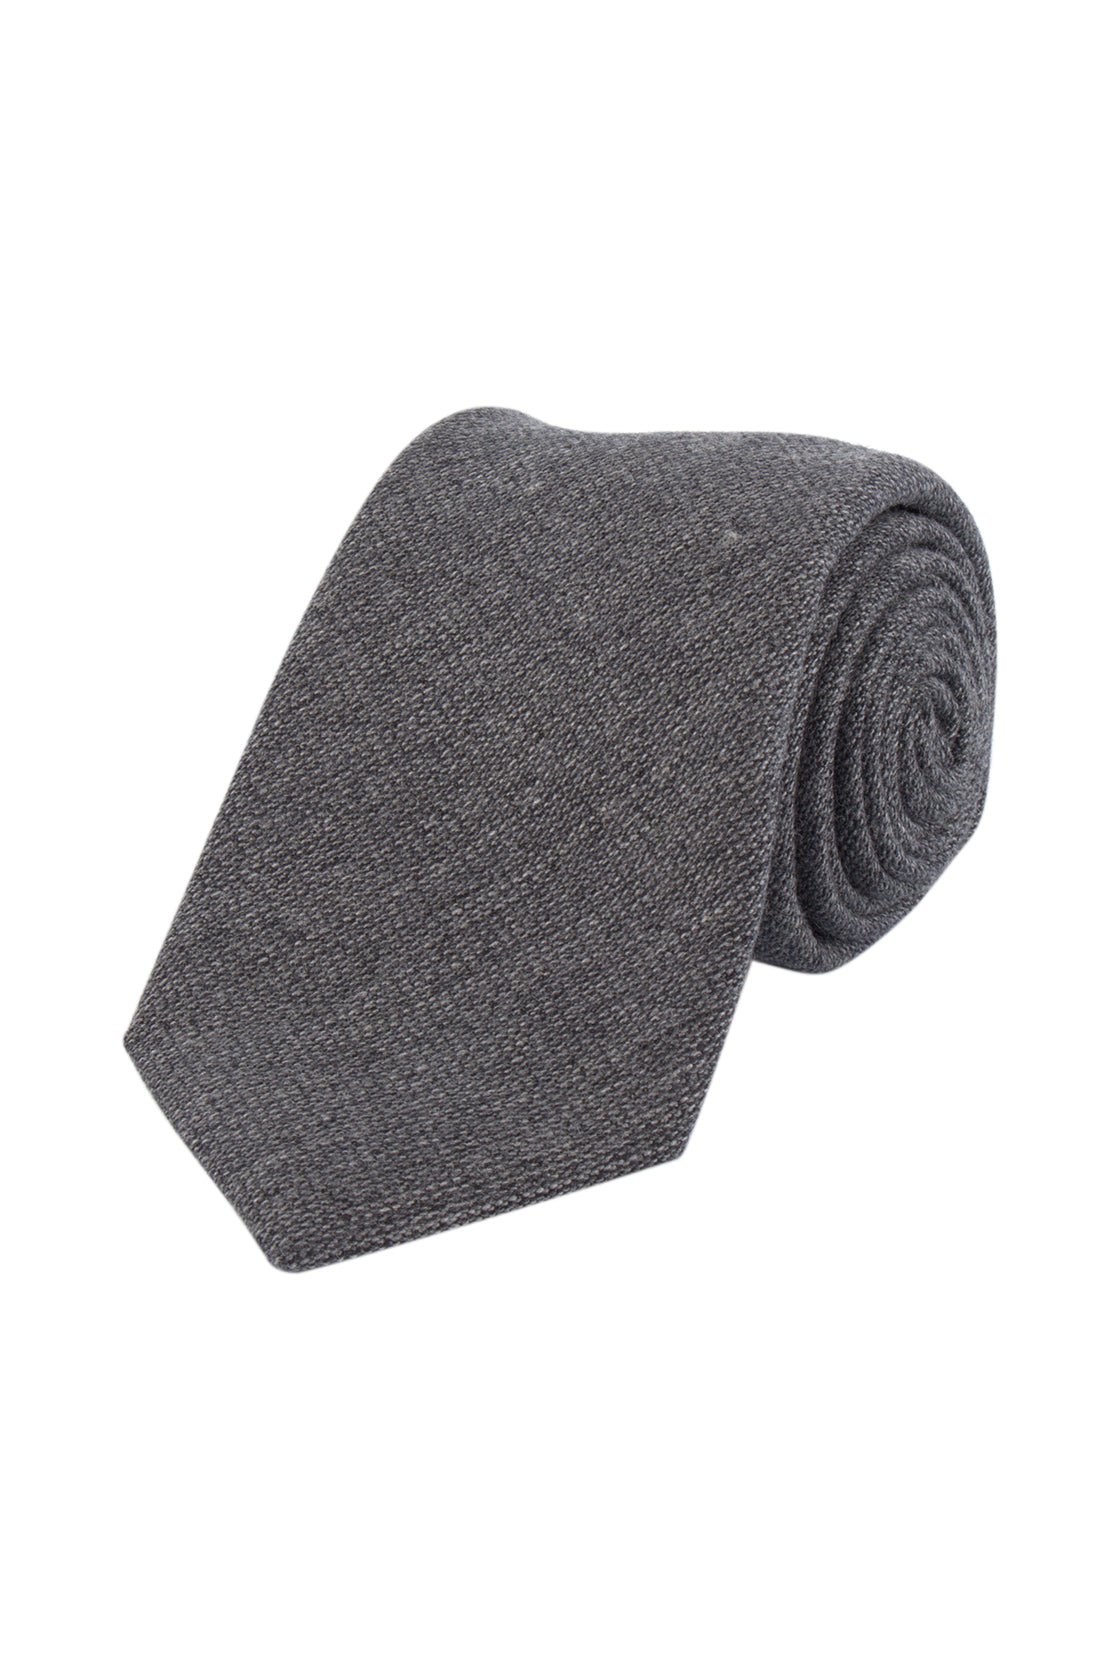 Hemley 7.5cm Wool/Silk Tie 1240019-2/9